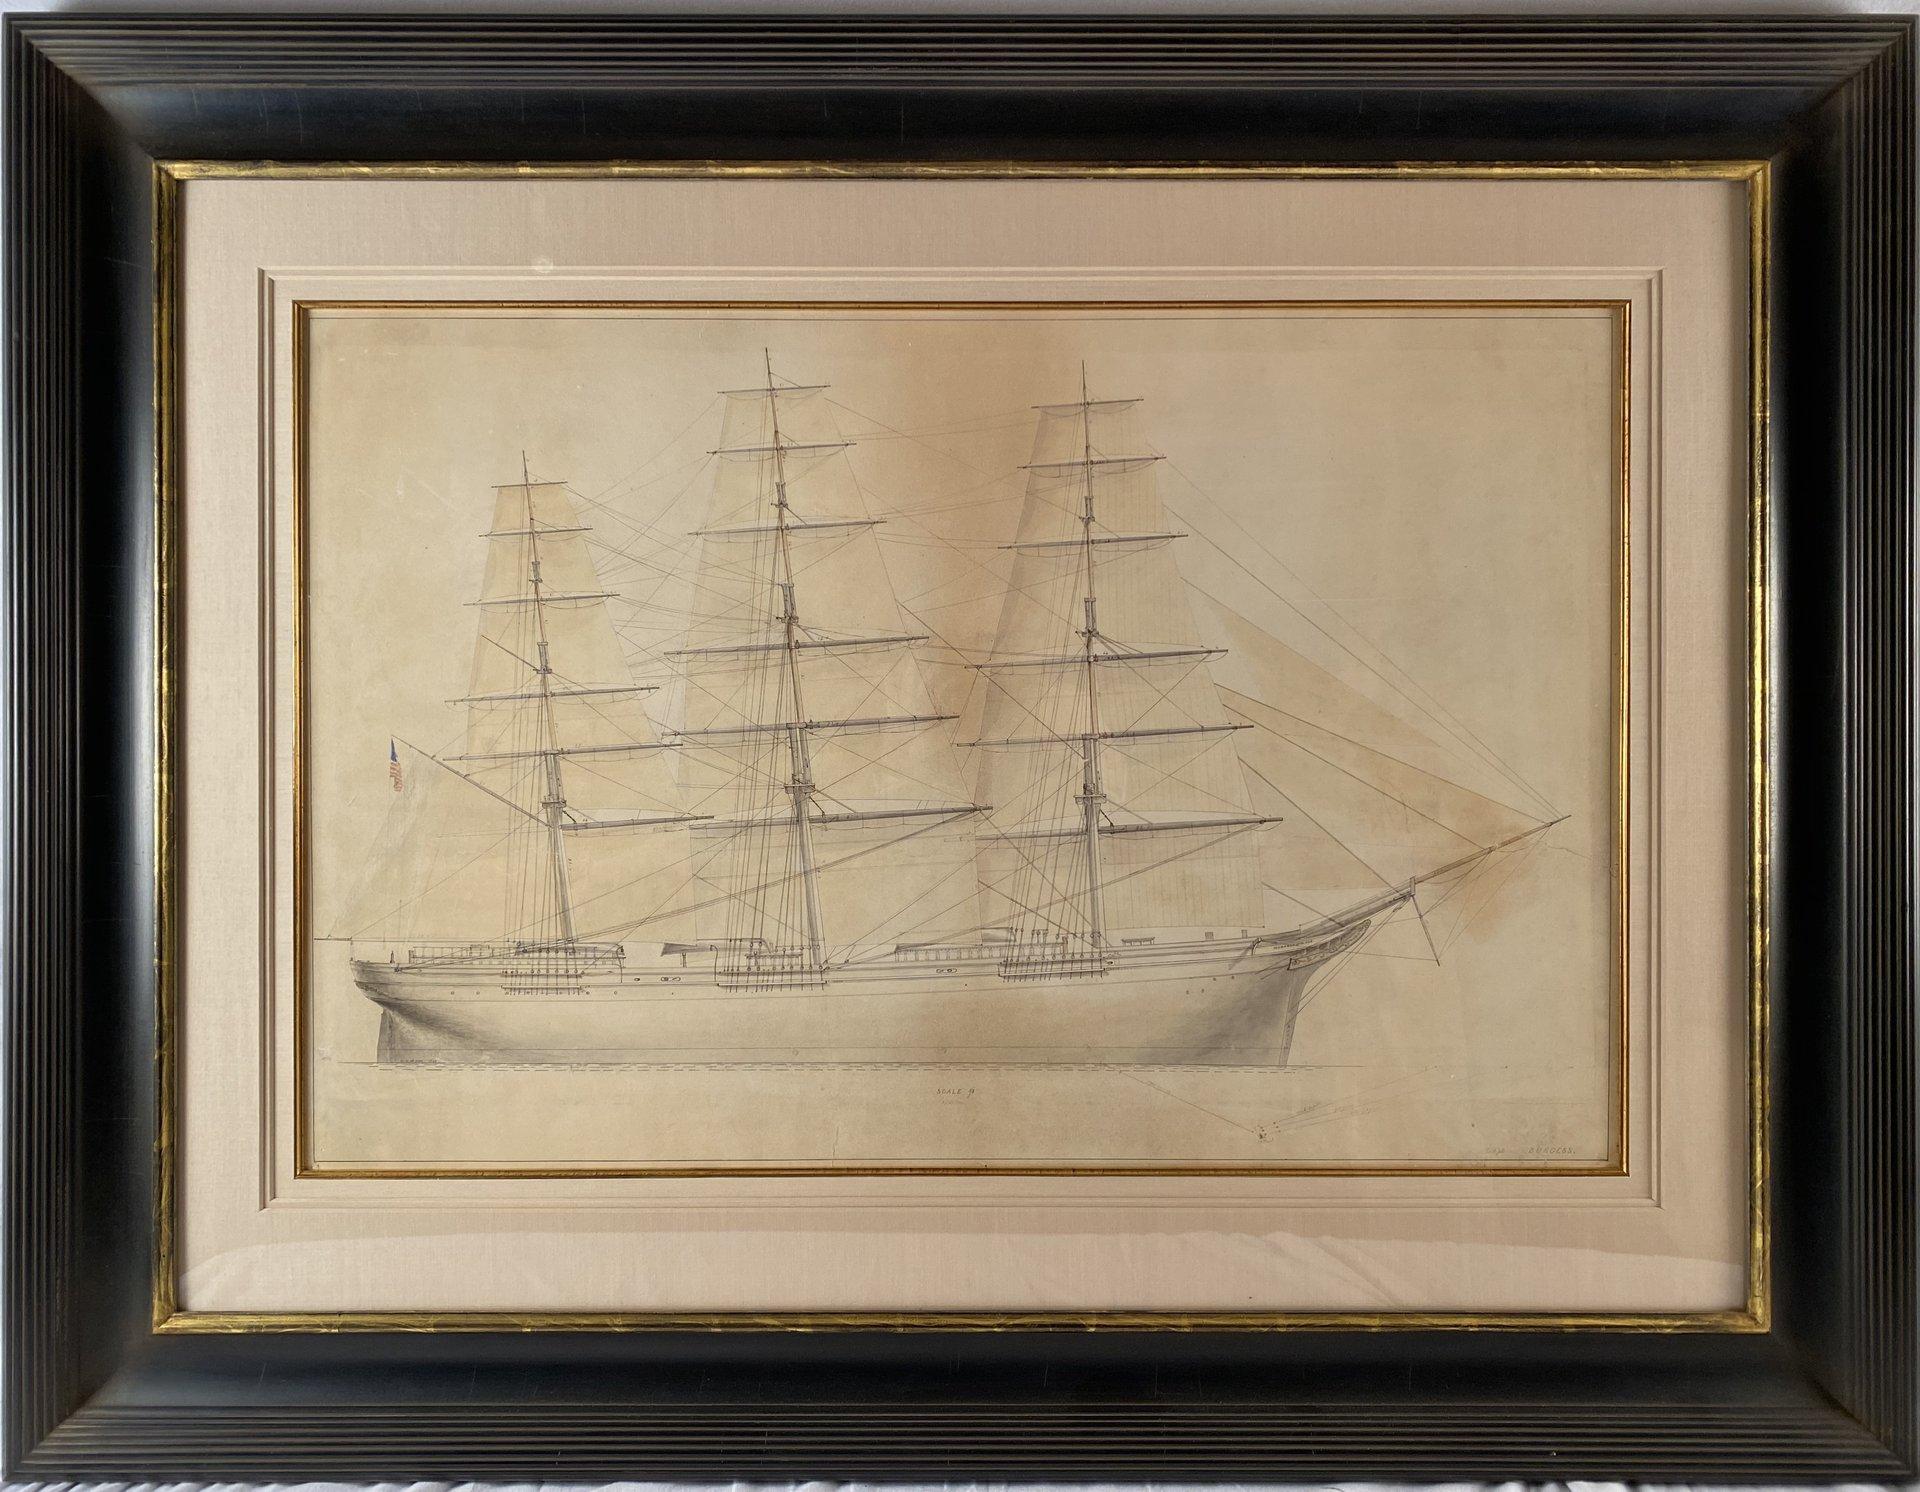 William Kimmins McMinn Figurative Art - "MONARCH OF THE SEA" (1858) BY WILLIAM K. MCMINN